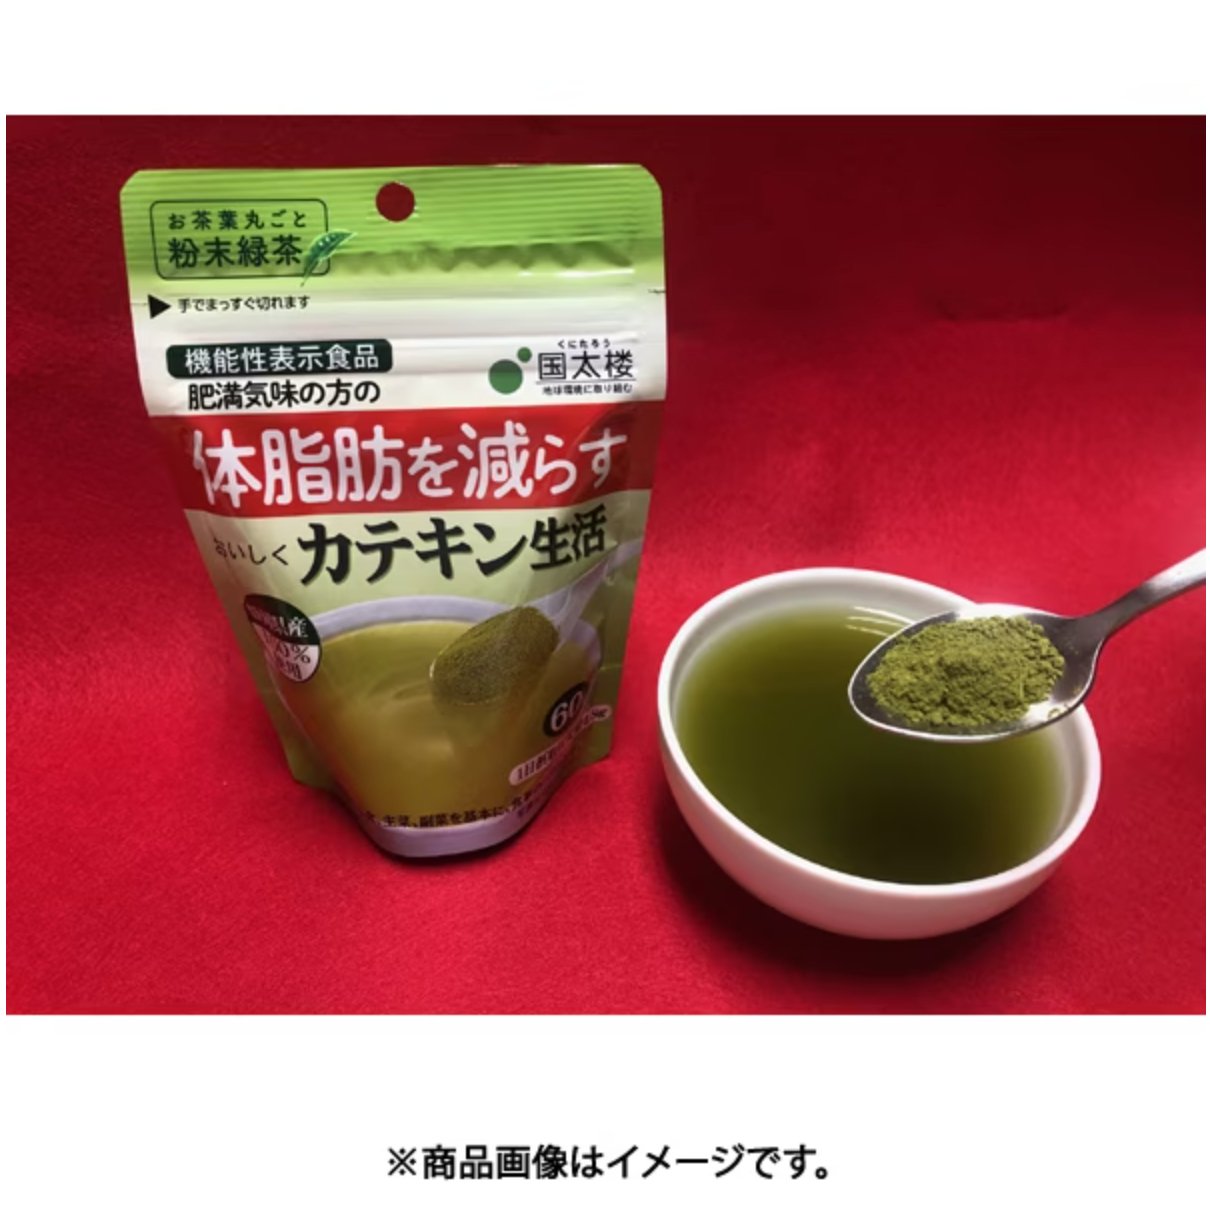 Kunitaro Delicious Catechin Life 60g - NihonMura